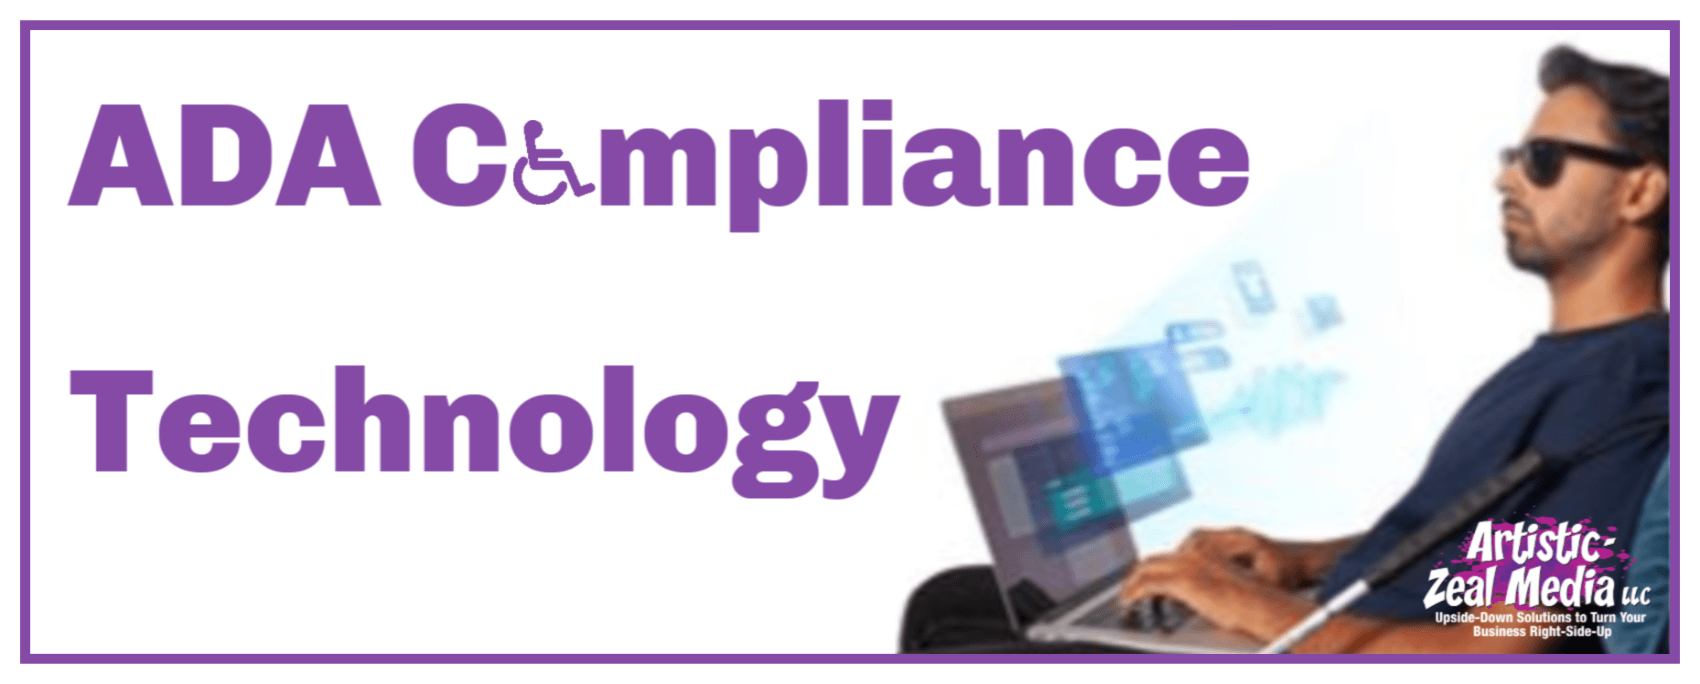 ada-compliance-technology-logo